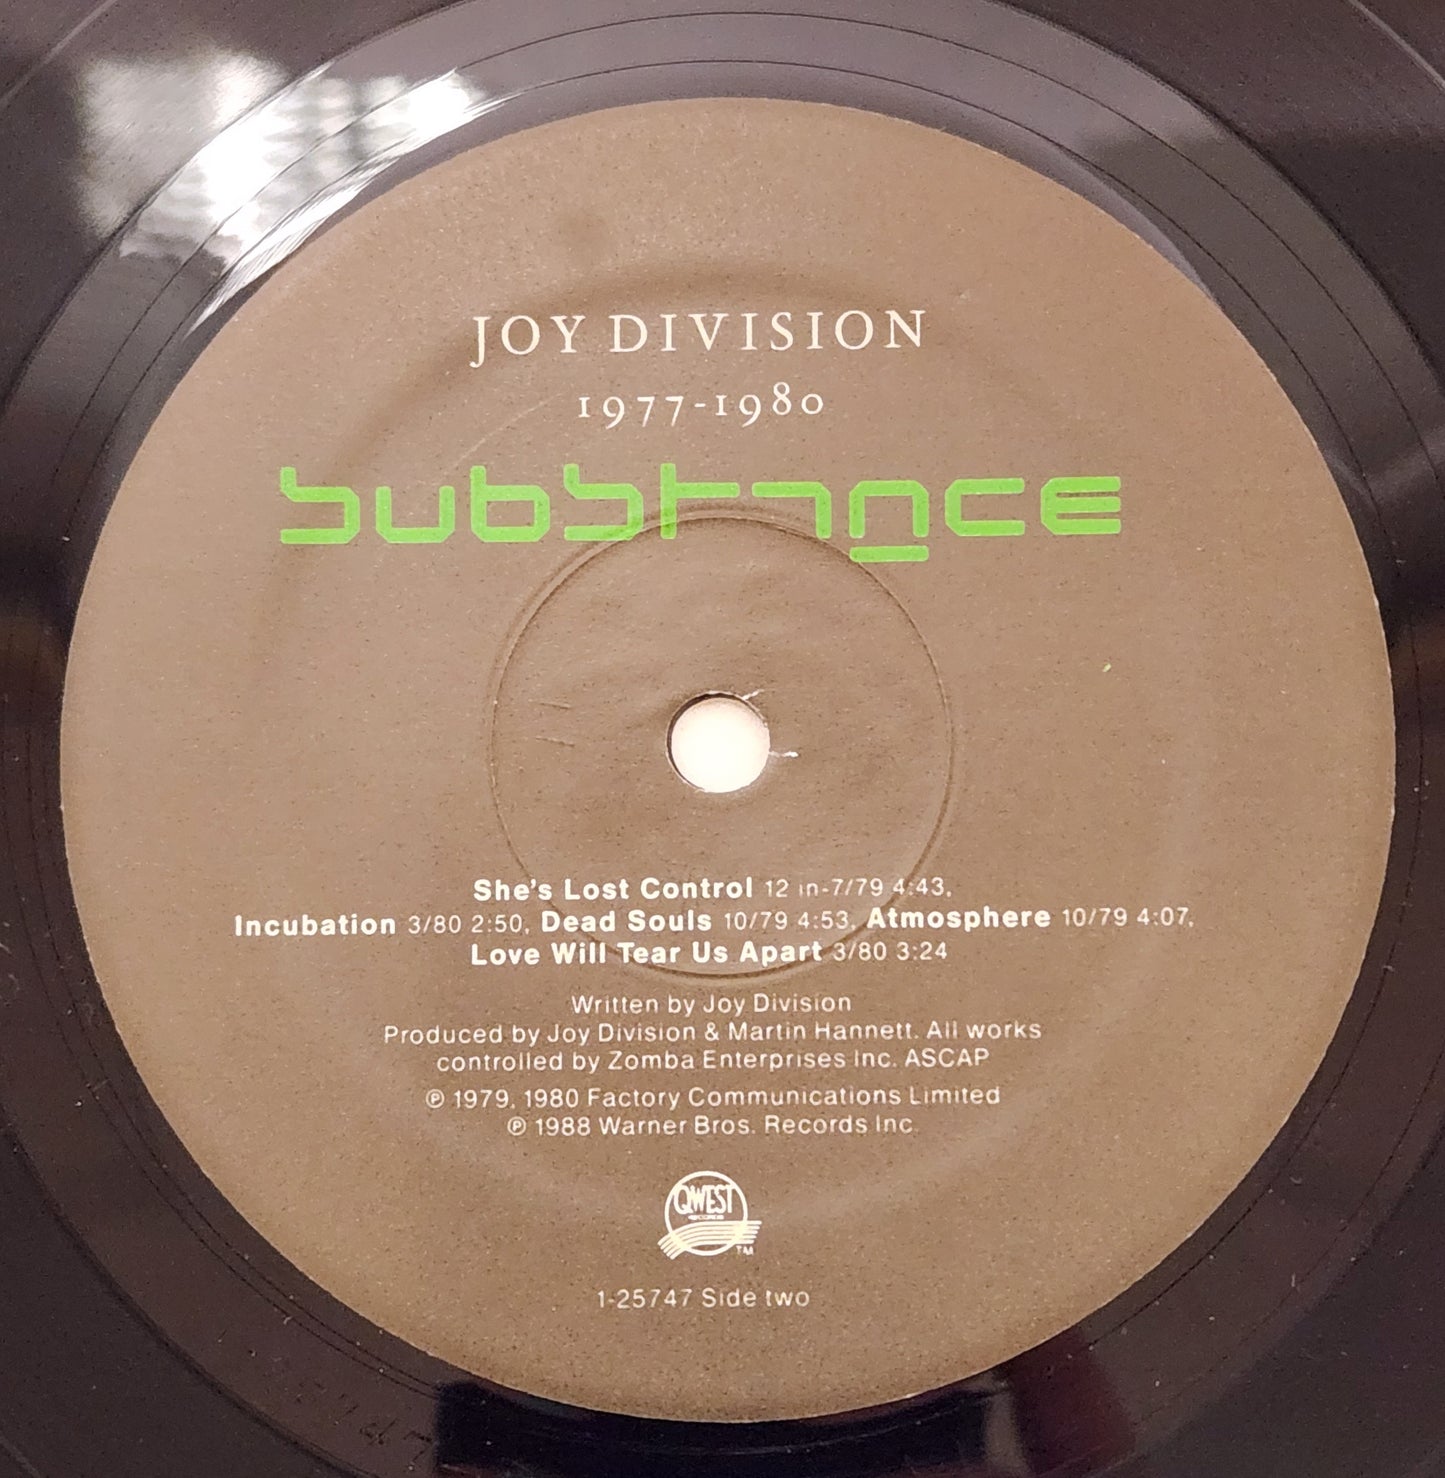 Joy Division  "Substance" 1988 New Wave Post Punk Record Album